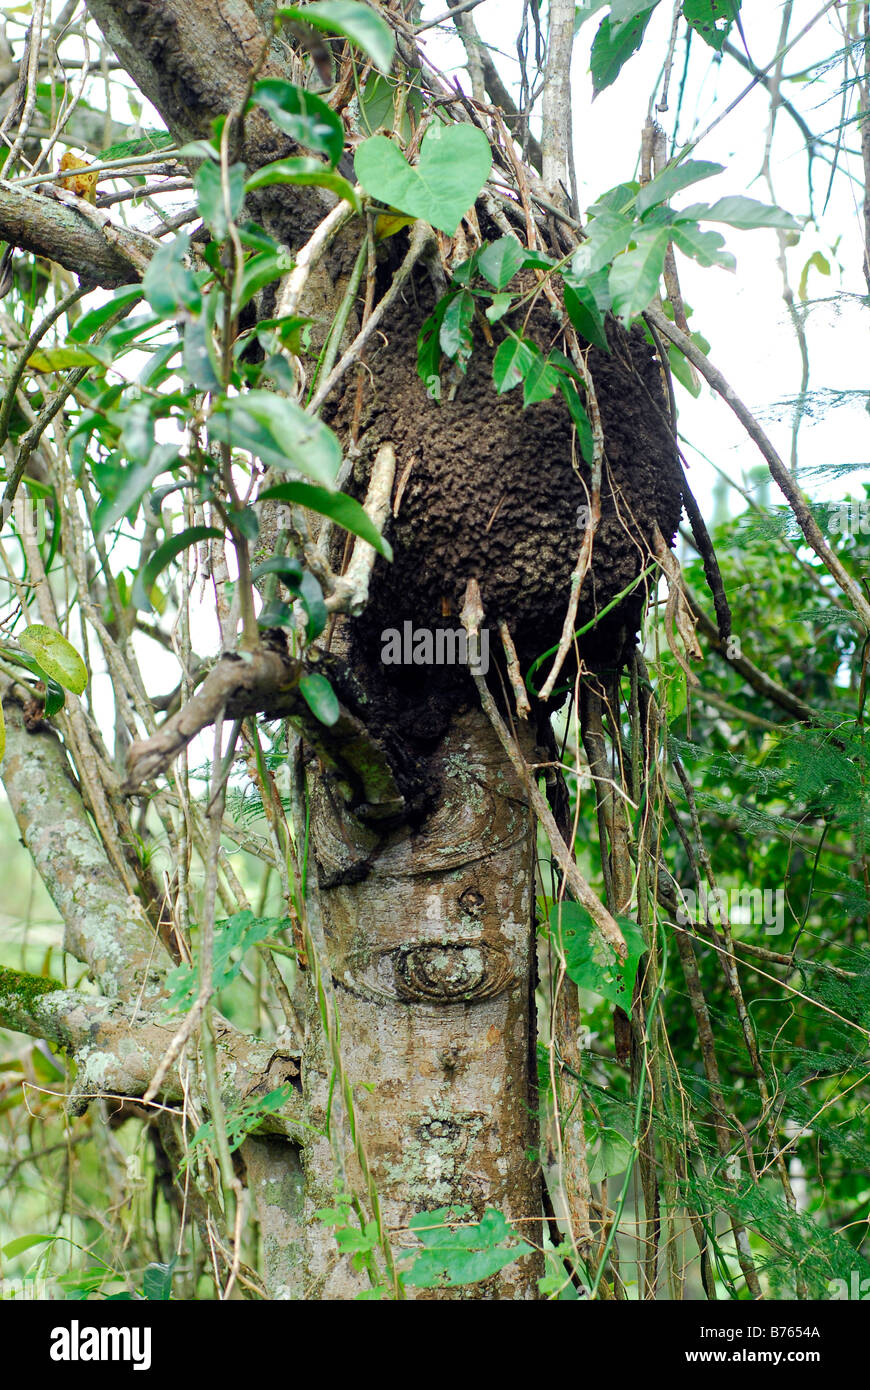 arboreal Termite nest Stockfoto